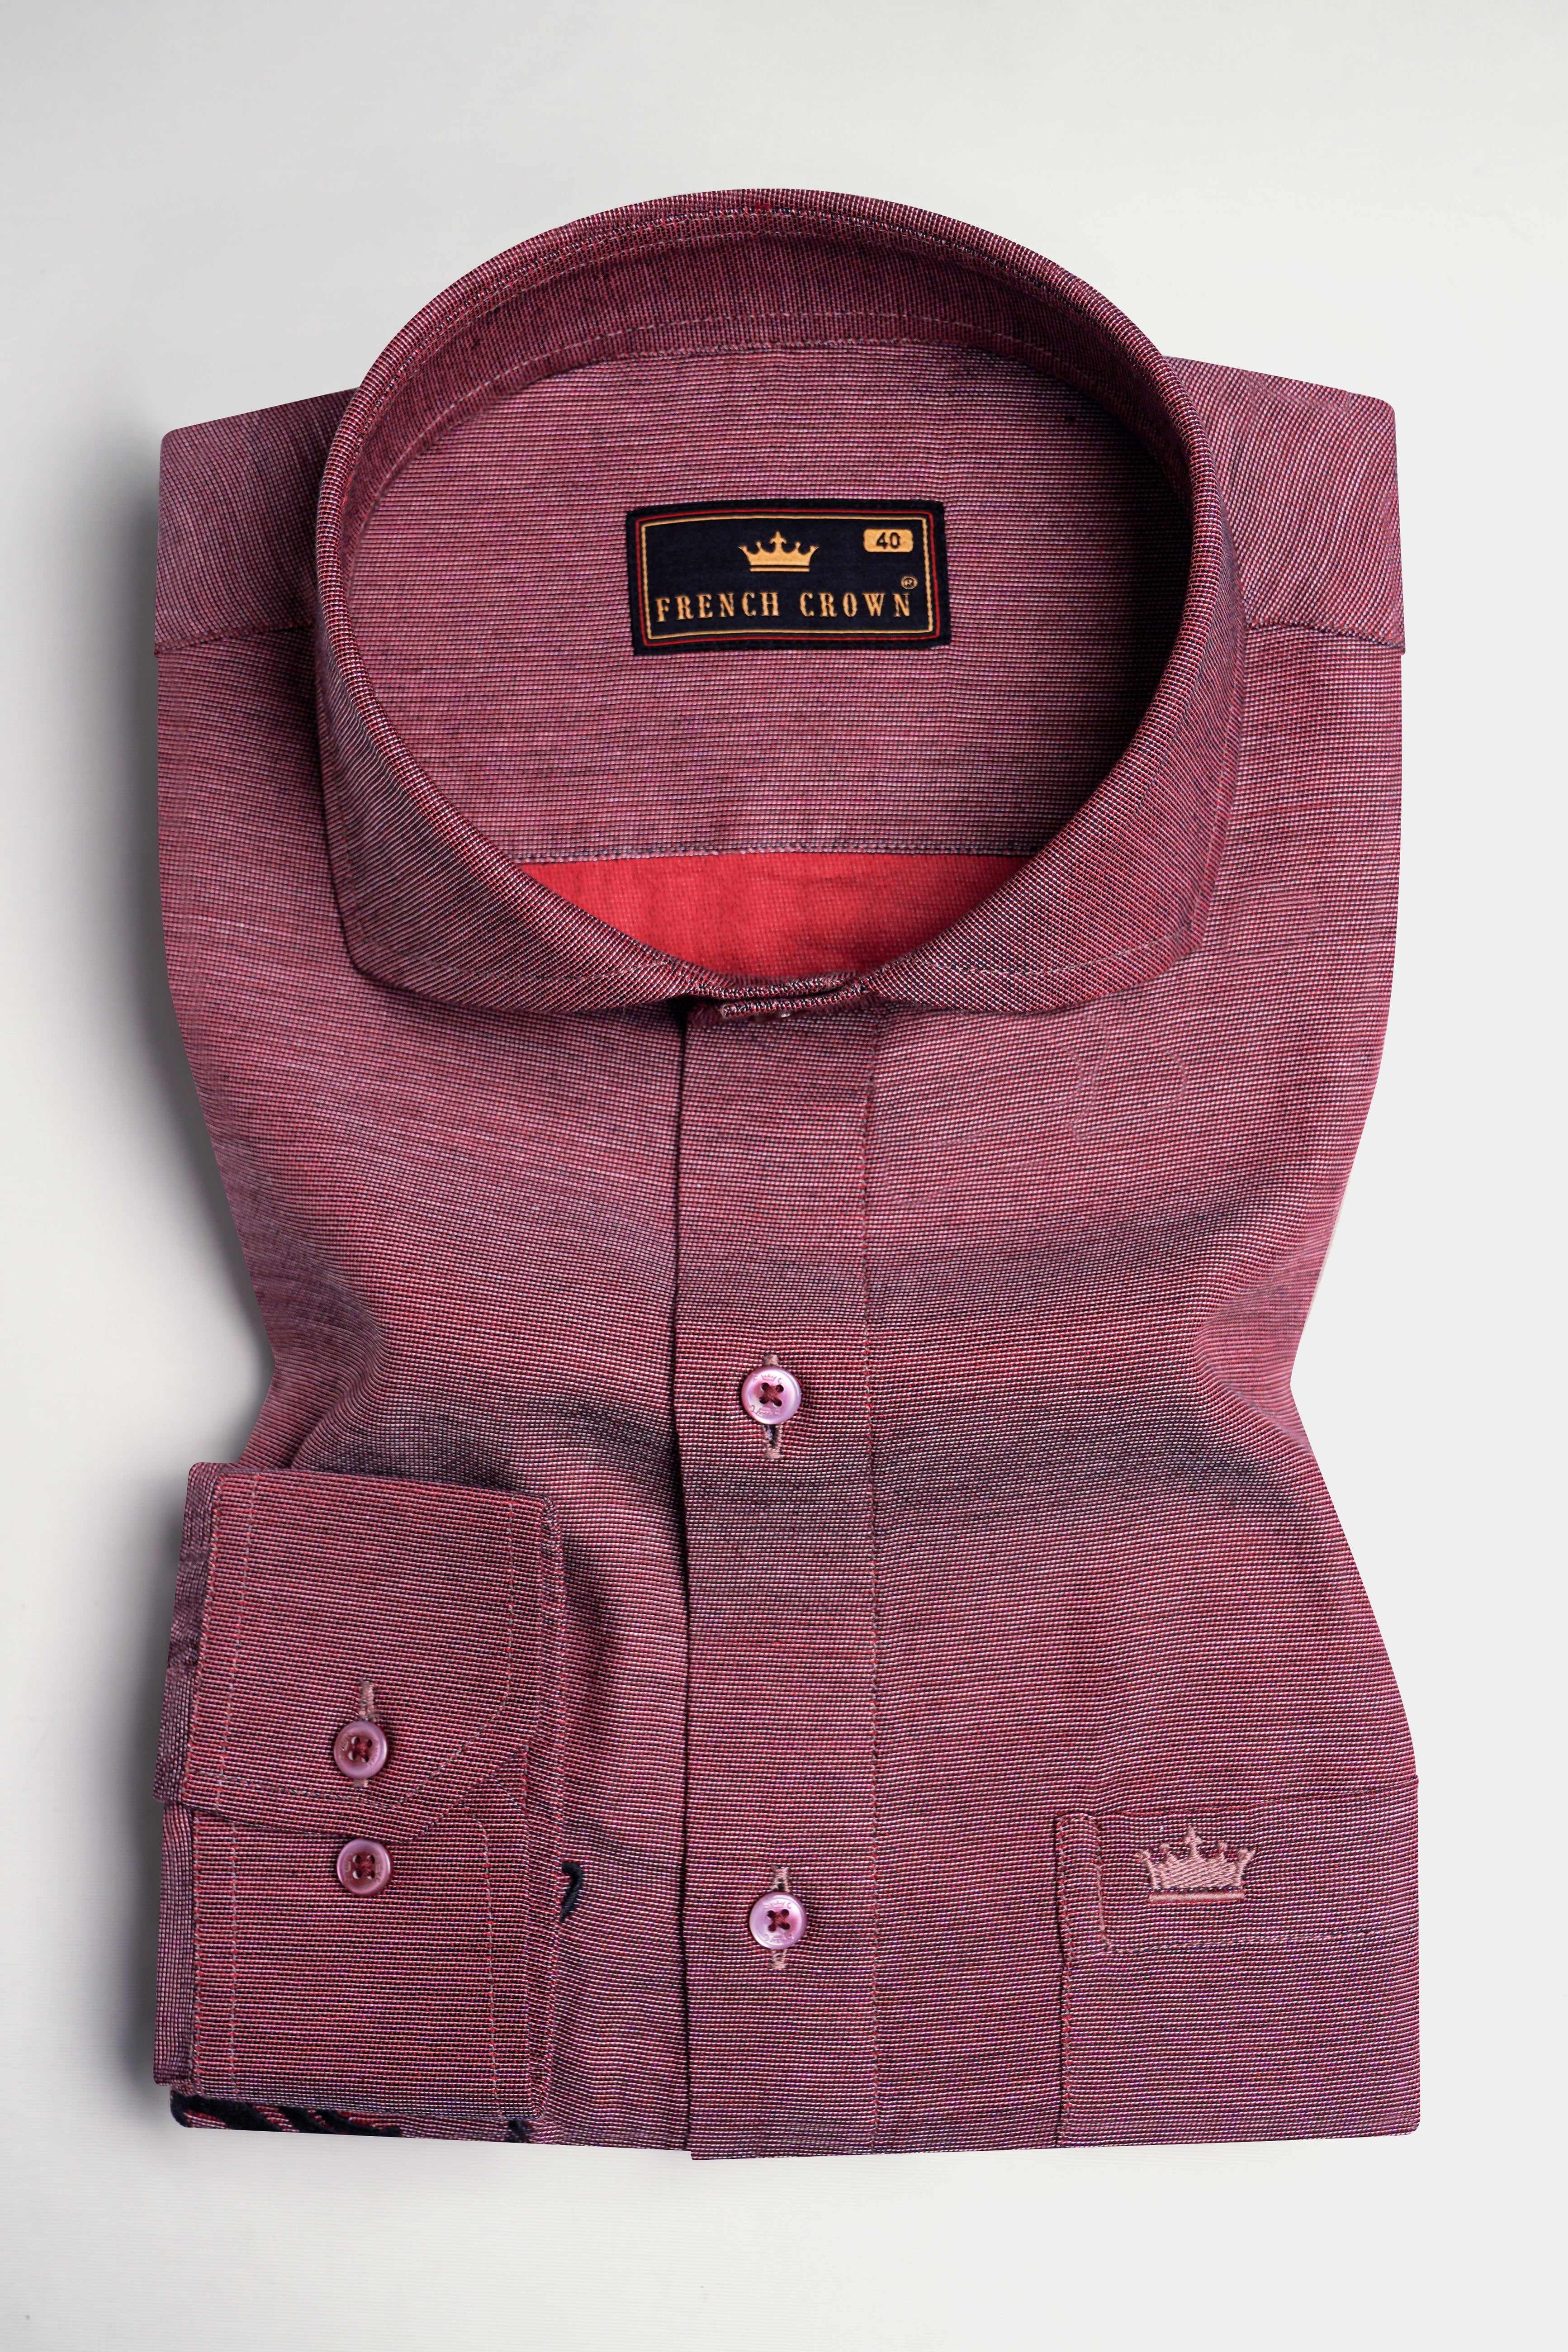 Claret Pink Dog Embroidered Two Tone Dobby Textured Premium Giza Cotton Designer Shirt 6259-CA-MN-E214-38, 6259-CA-MN-E214-H-38, 6259-CA-MN-E214-39, 6259-CA-MN-E214-H-39, 6259-CA-MN-E214-40, 6259-CA-MN-E214-H-40, 6259-CA-MN-E214-42, 6259-CA-MN-E214-H-42, 6259-CA-MN-E214-44, 6259-CA-MN-E214-H-44, 6259-CA-MN-E214-46, 6259-CA-MN-E214-H-46, 6259-CA-MN-E214-48, 6259-CA-MN-E214-H-48, 6259-CA-MN-E214-50, 6259-CA-MN-E214-H-50, 6259-CA-MN-E214-52, 6259-CA-MN-E214-H-52